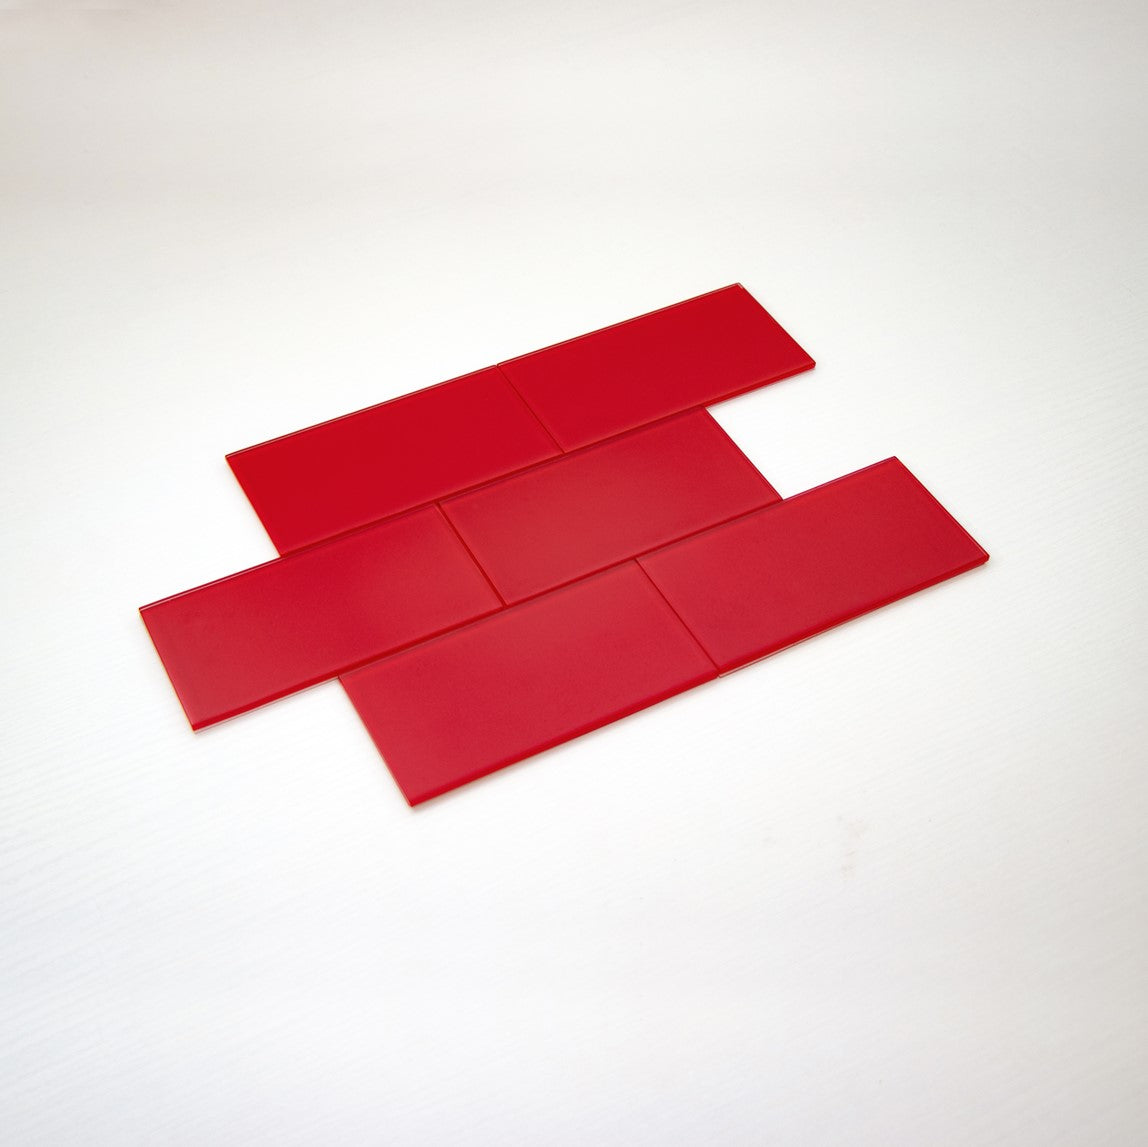 3" x 6" x 5mm Glass Peel & Stick Subway Tile - 8 Square Feet Per Carton